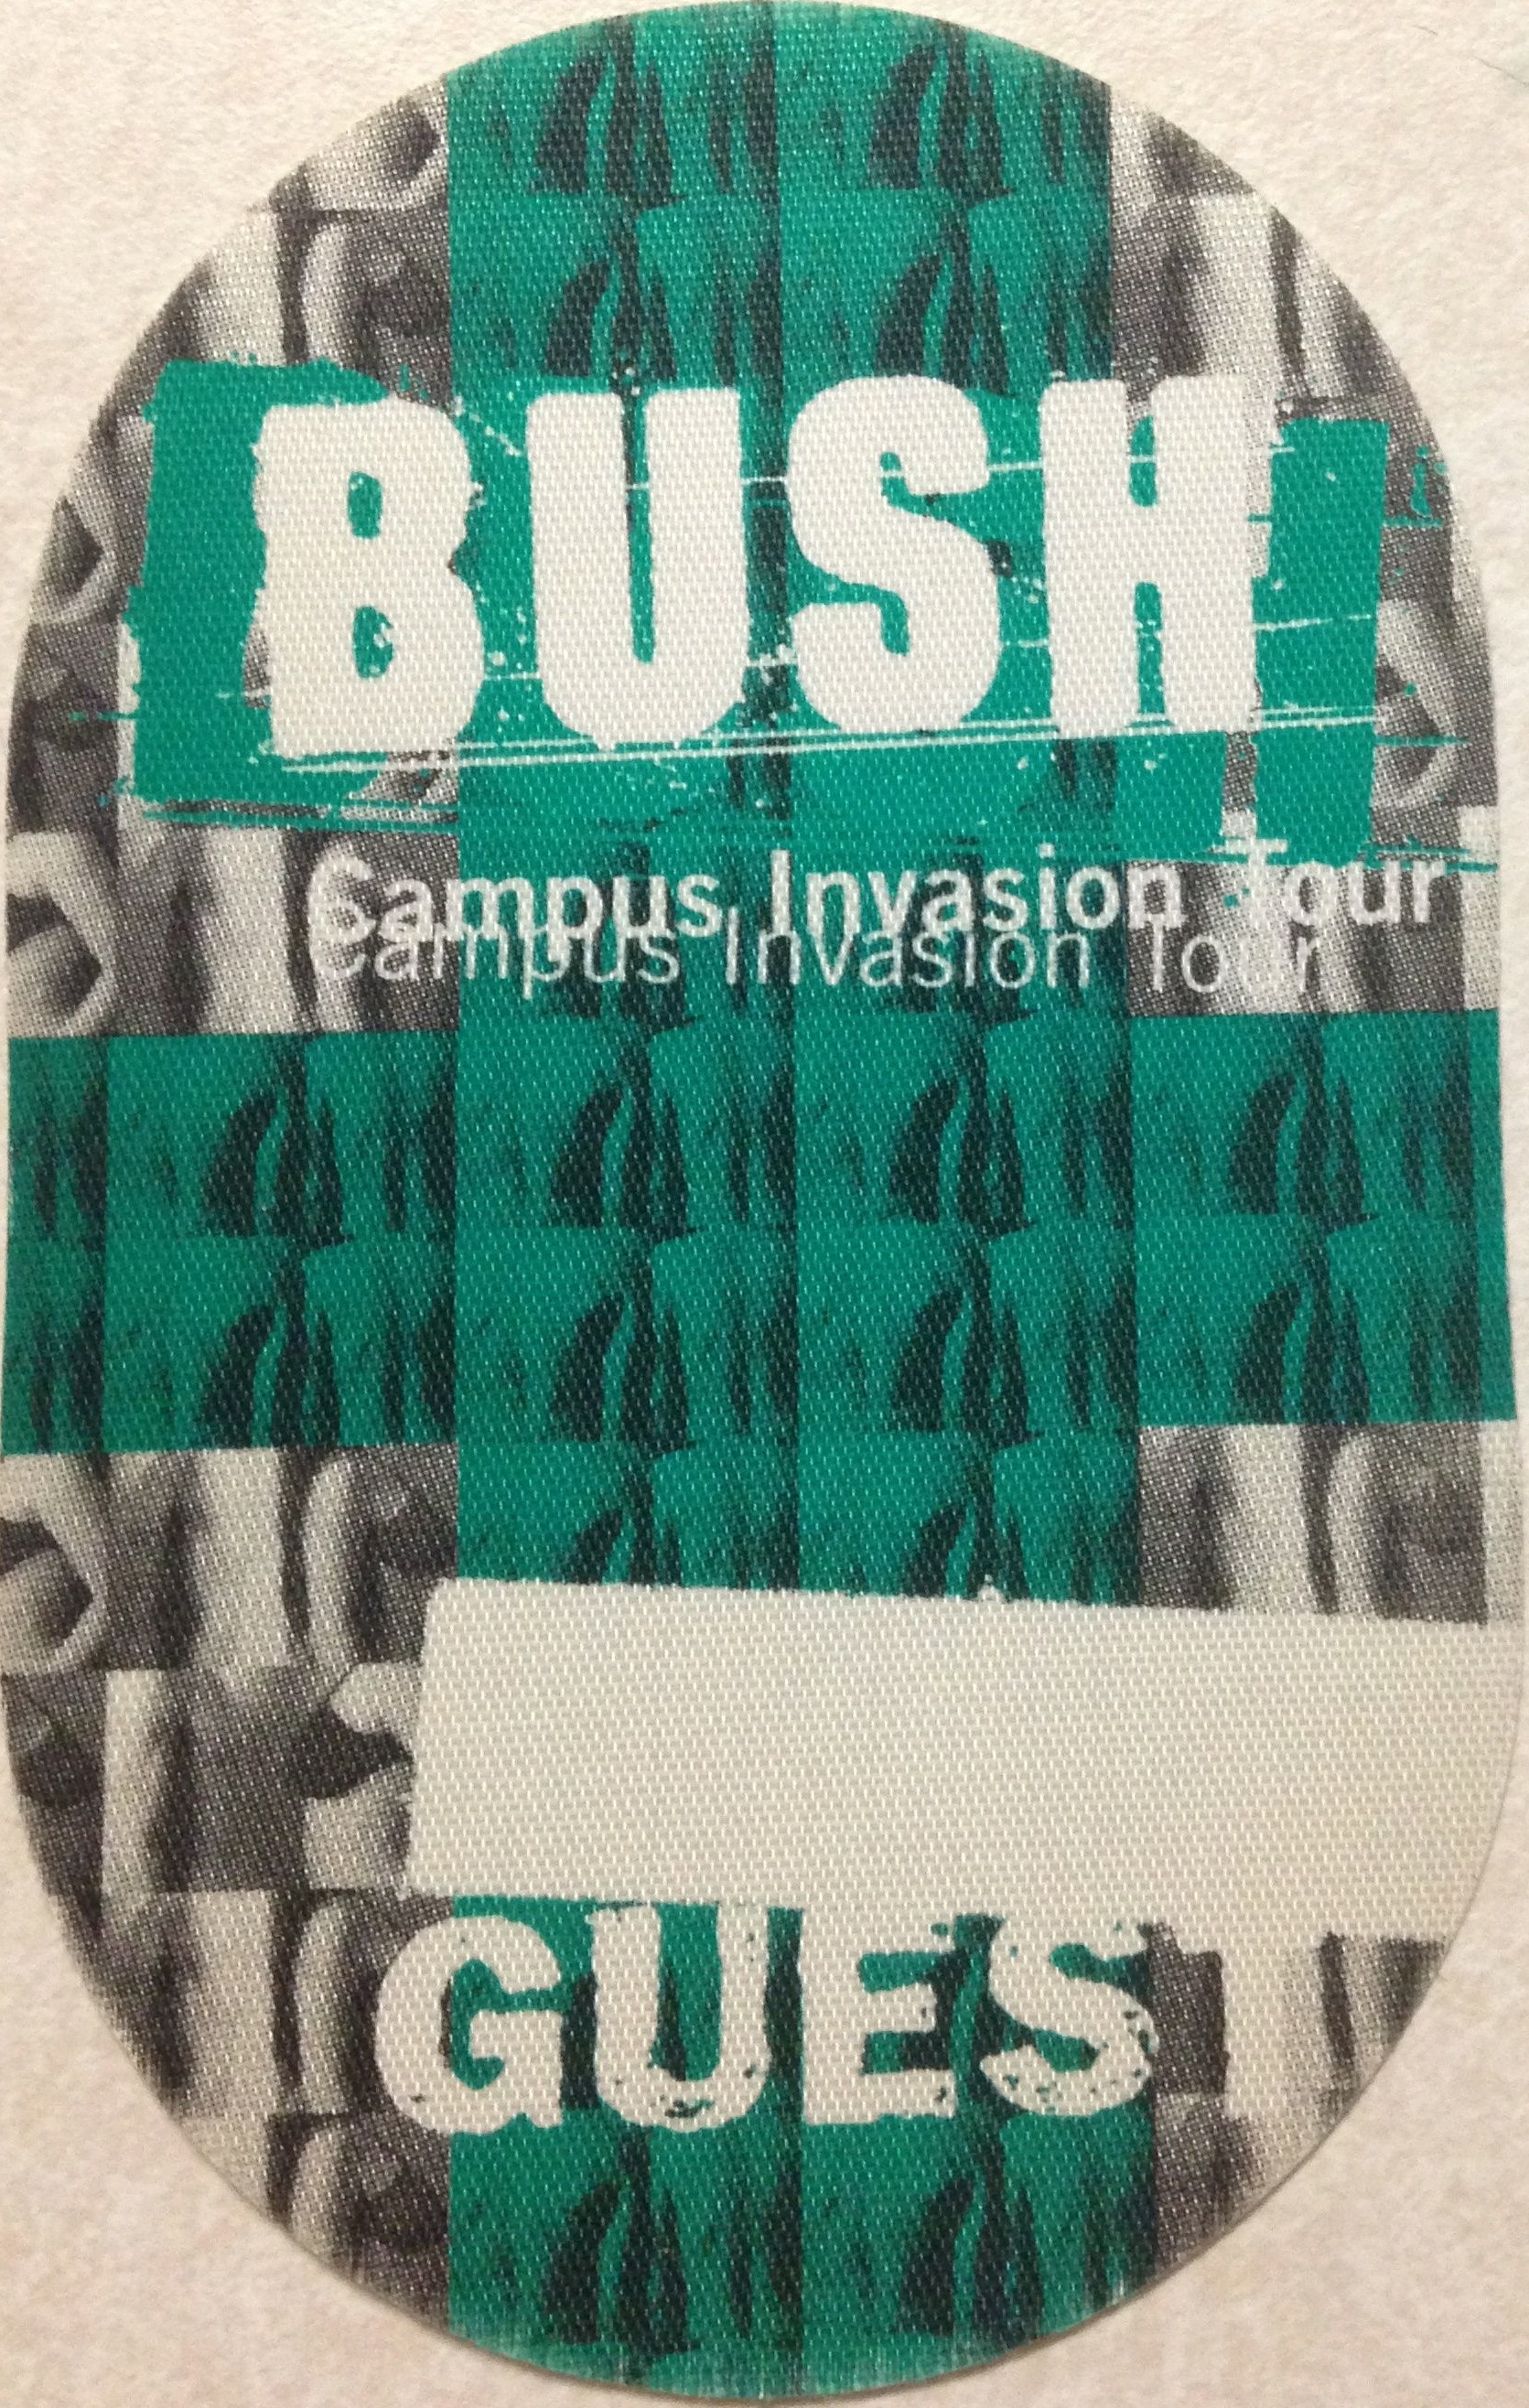 Campus Invasion Tour Guest